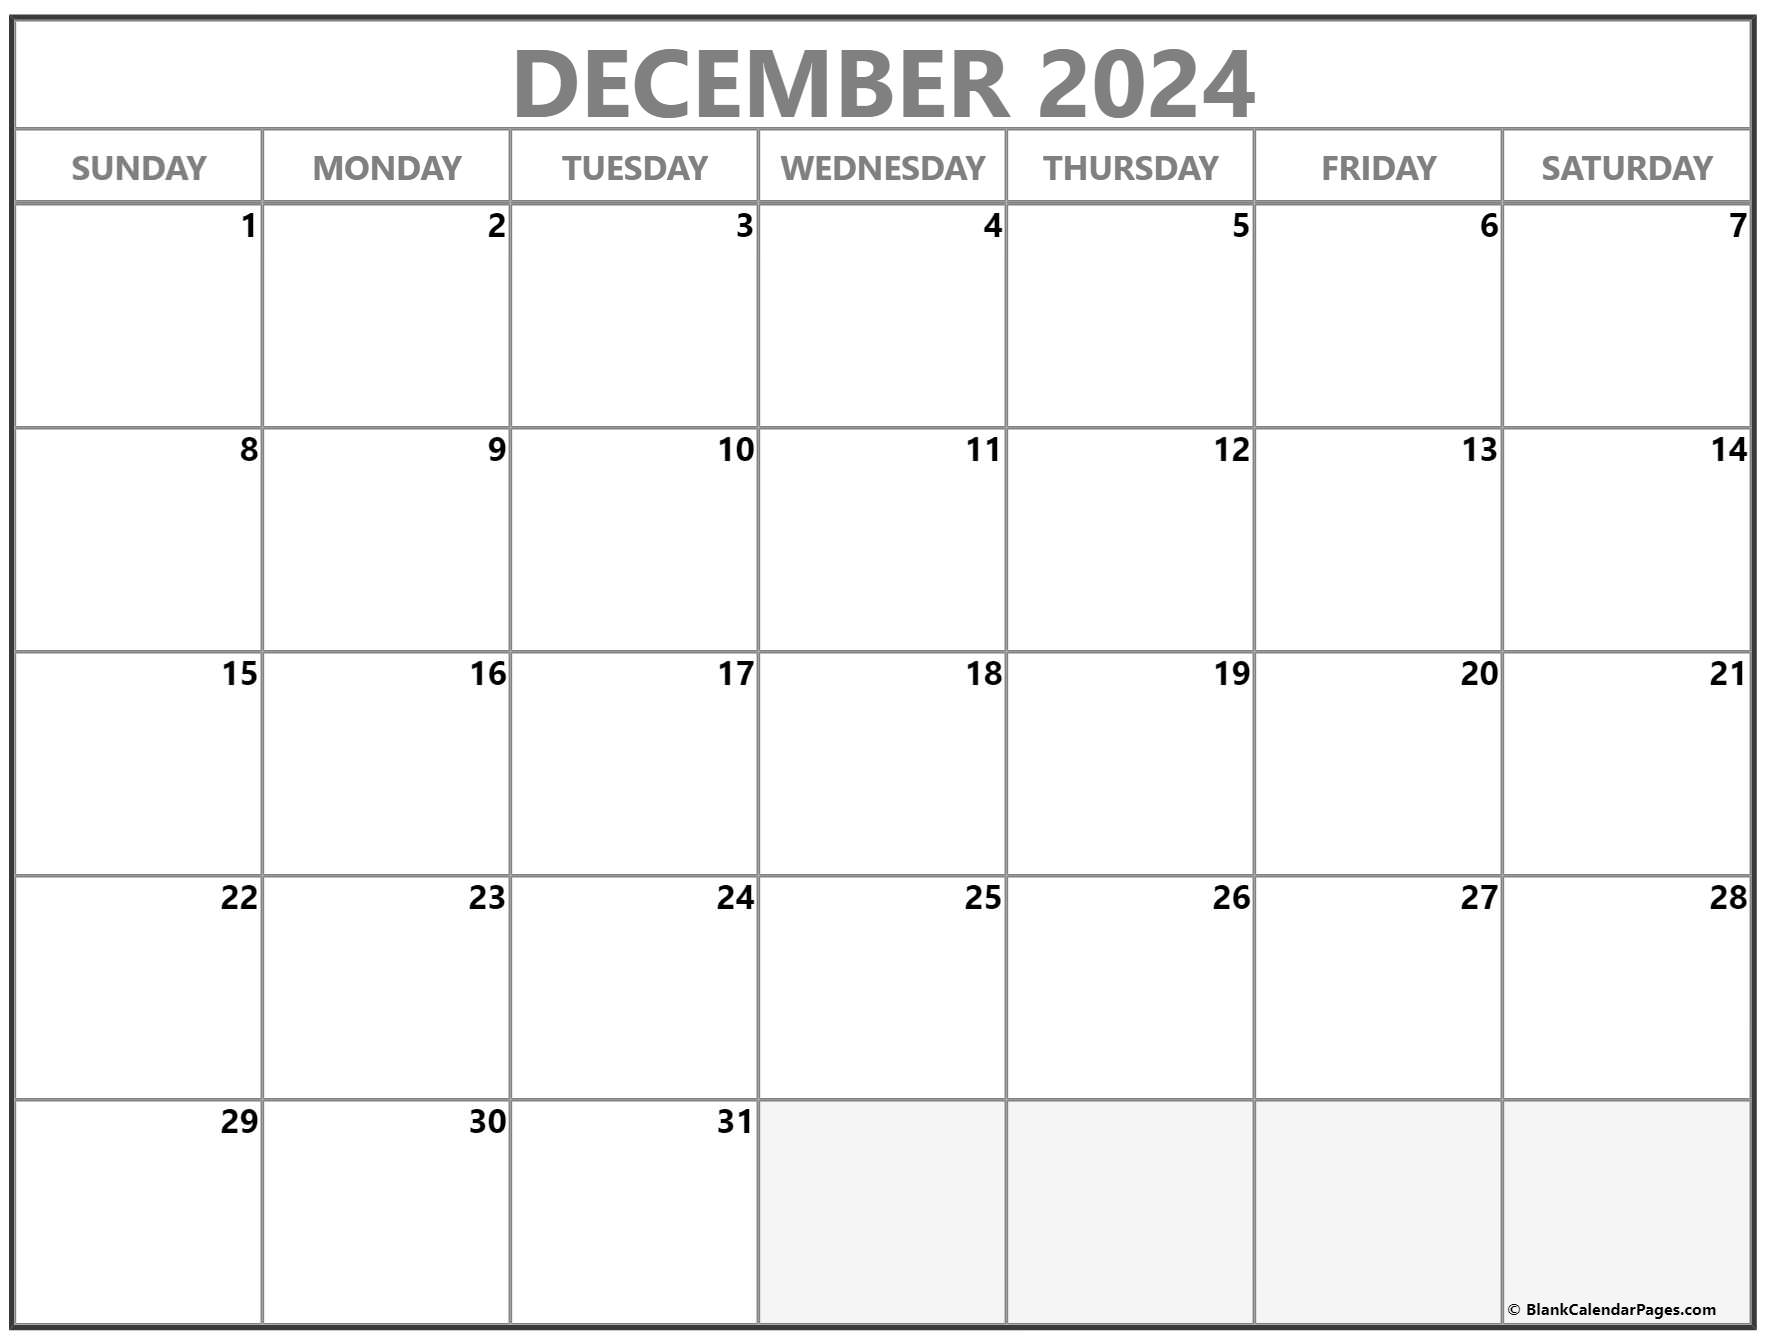 december-2022-calendar-free-printable-calendar-20-december-2022-calendar-printable-us-holidays